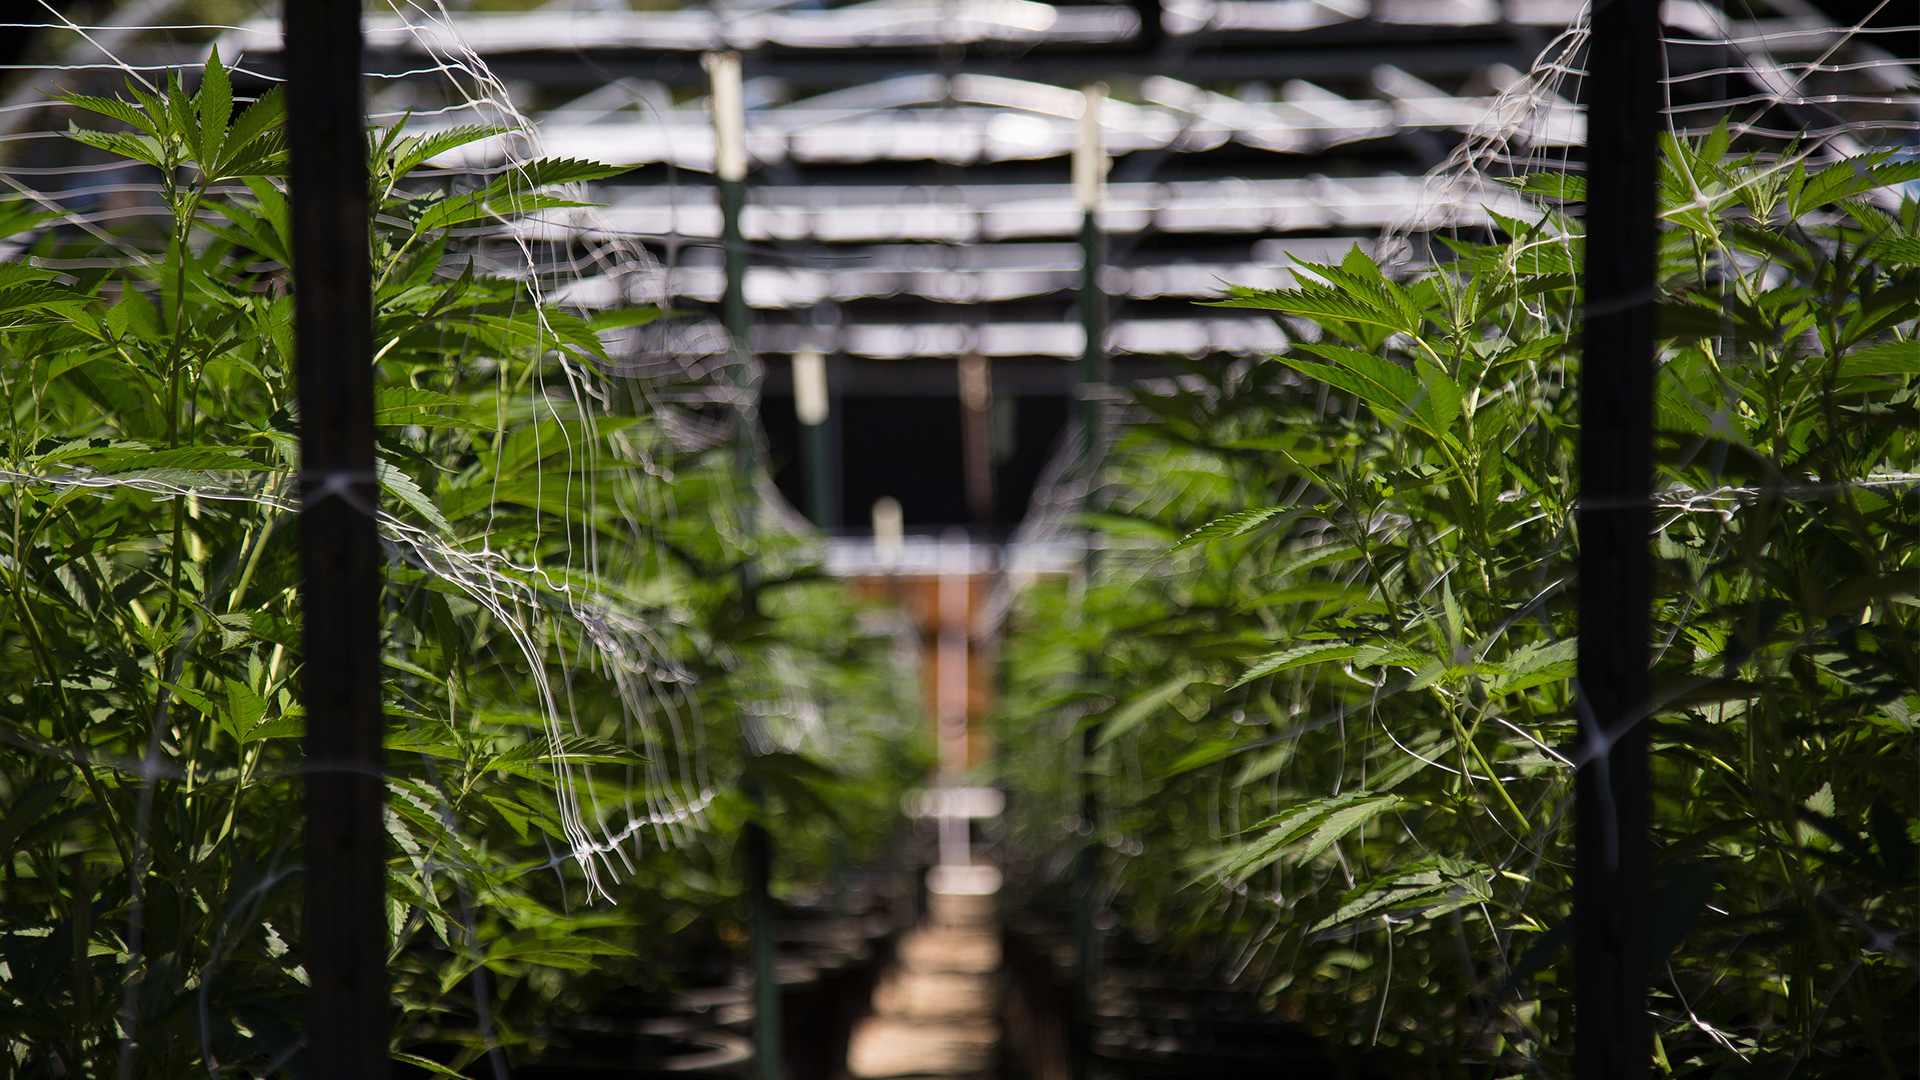 cannabis greenhouse blurred